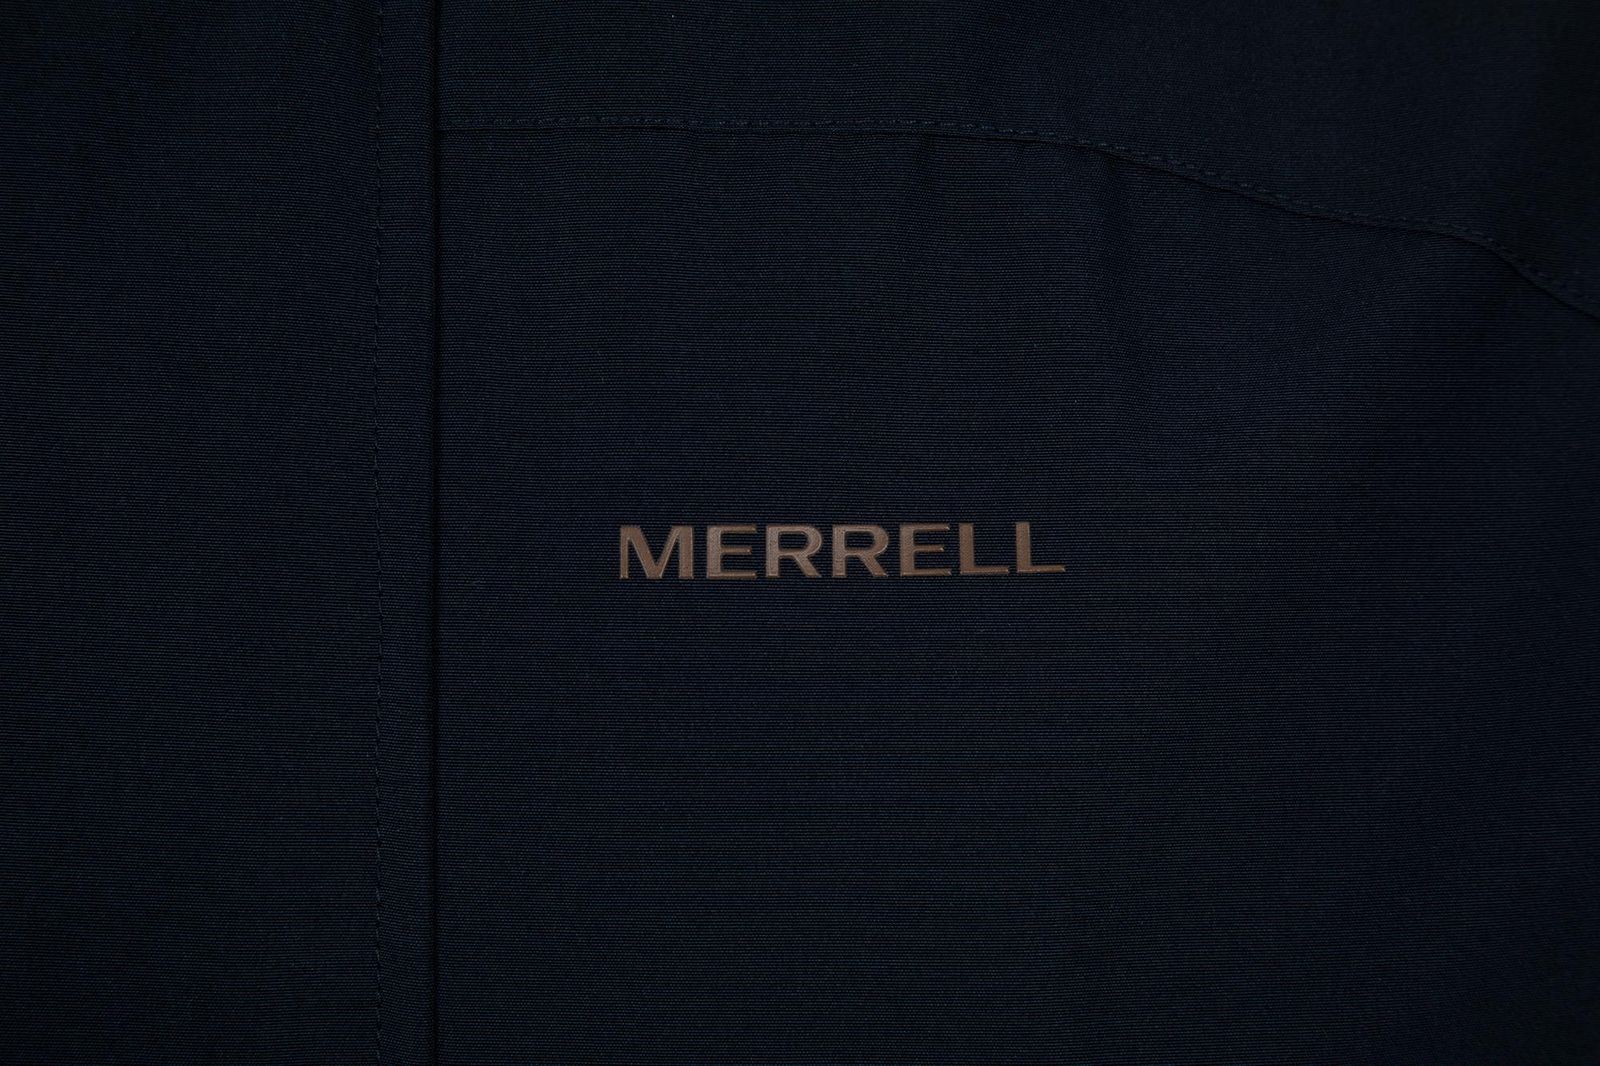   Merrell Men's Windbreaker, : -. S19AMRJAM09-Z4.  48